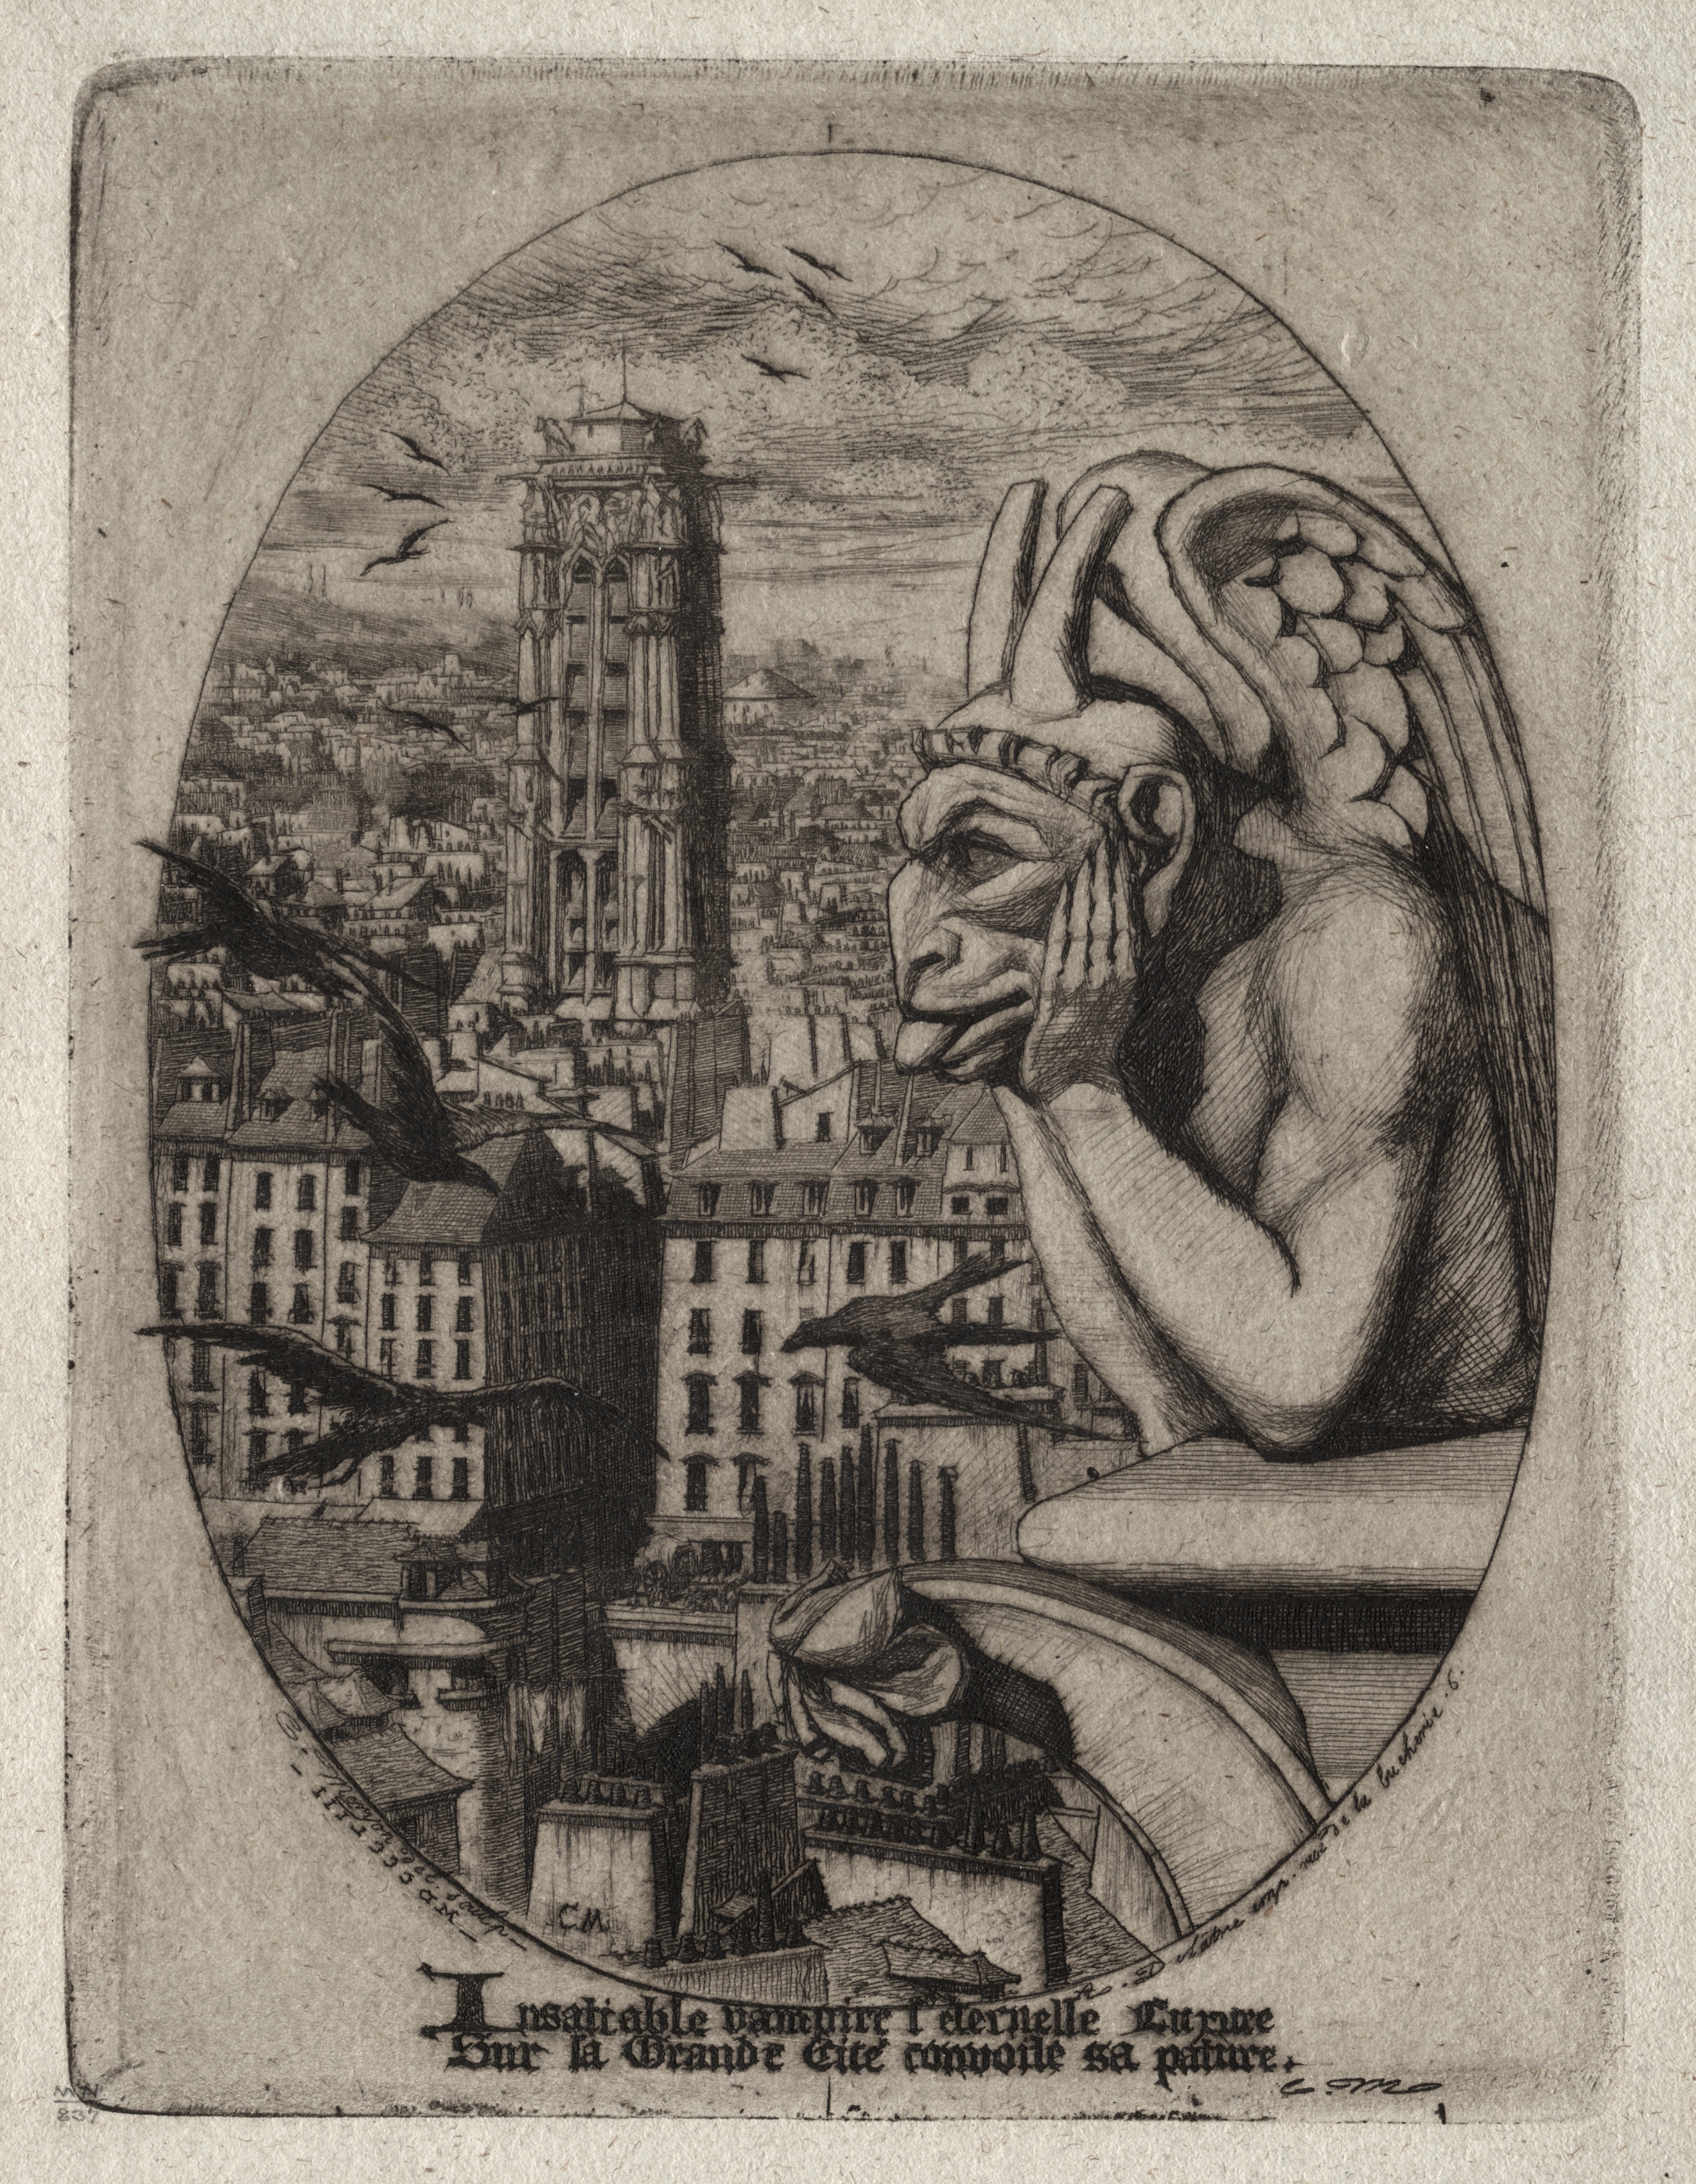 Etchings of Paris:  The Gargoyle